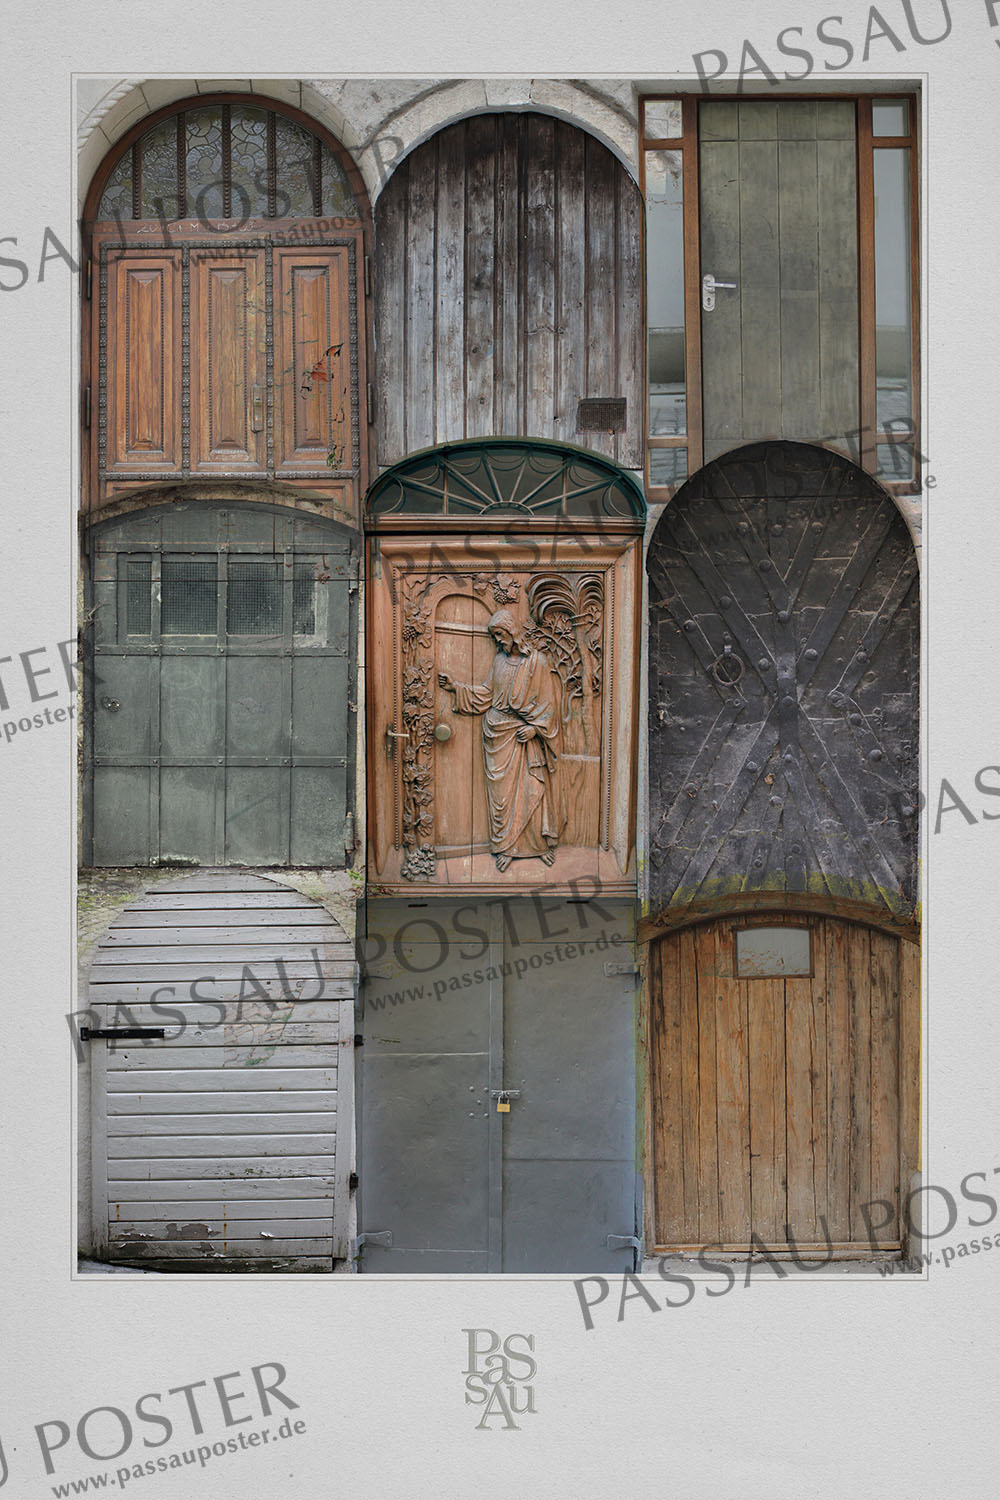 Passau Poster - Passauer Details: Türen